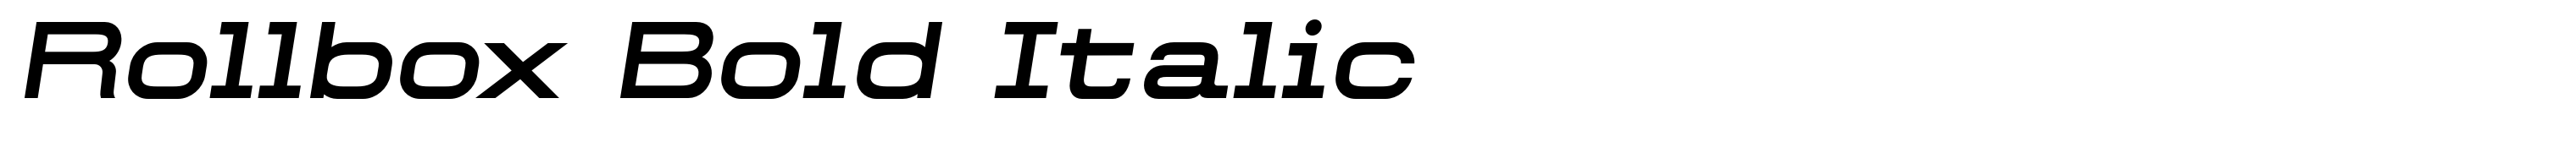 Rollbox Bold Italic